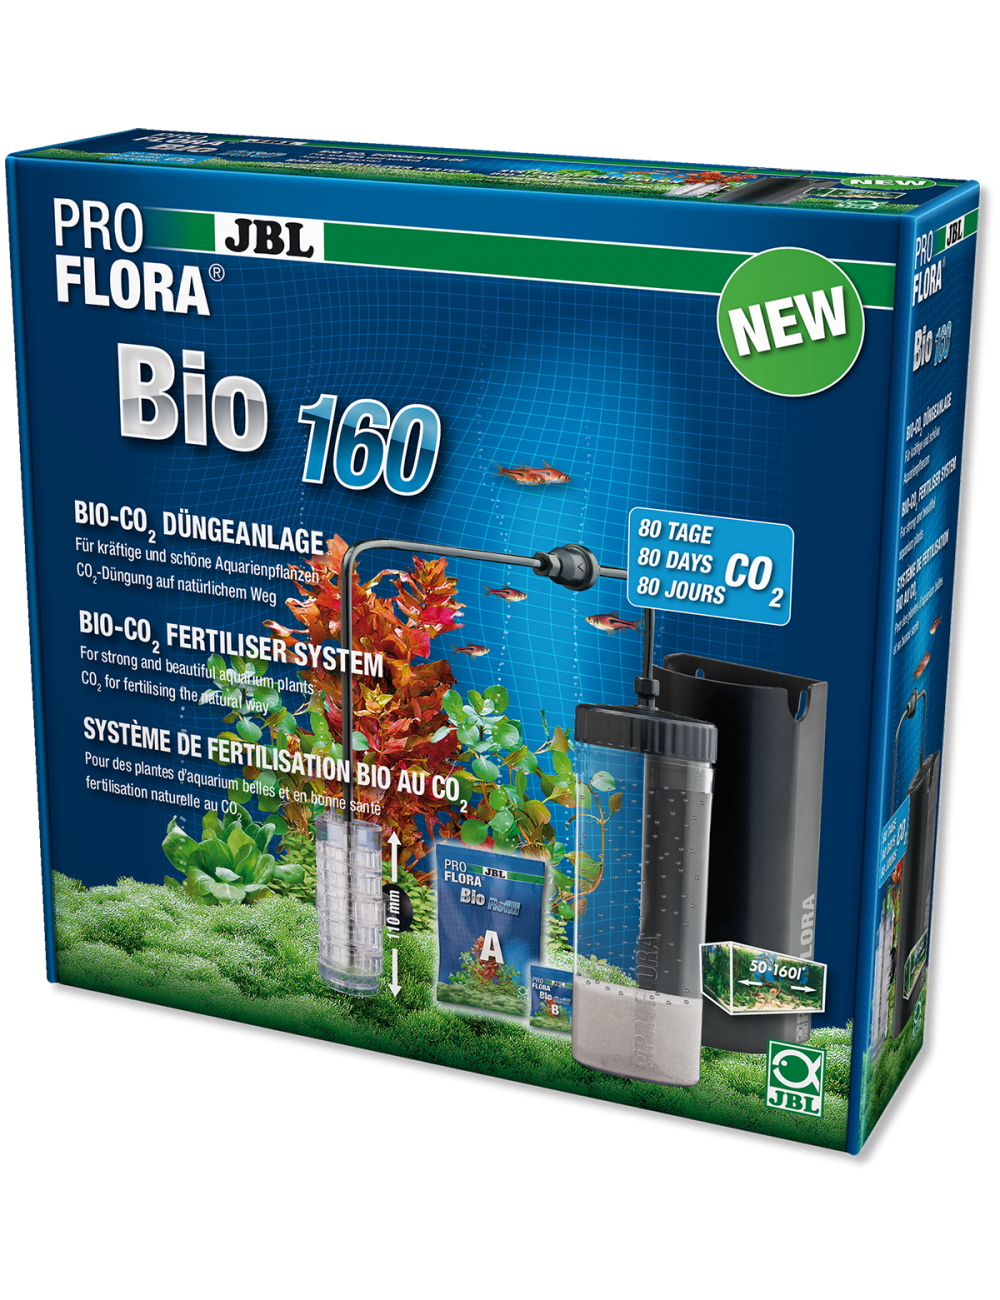 JBL - ProFlora bio160 2 - 80 jours